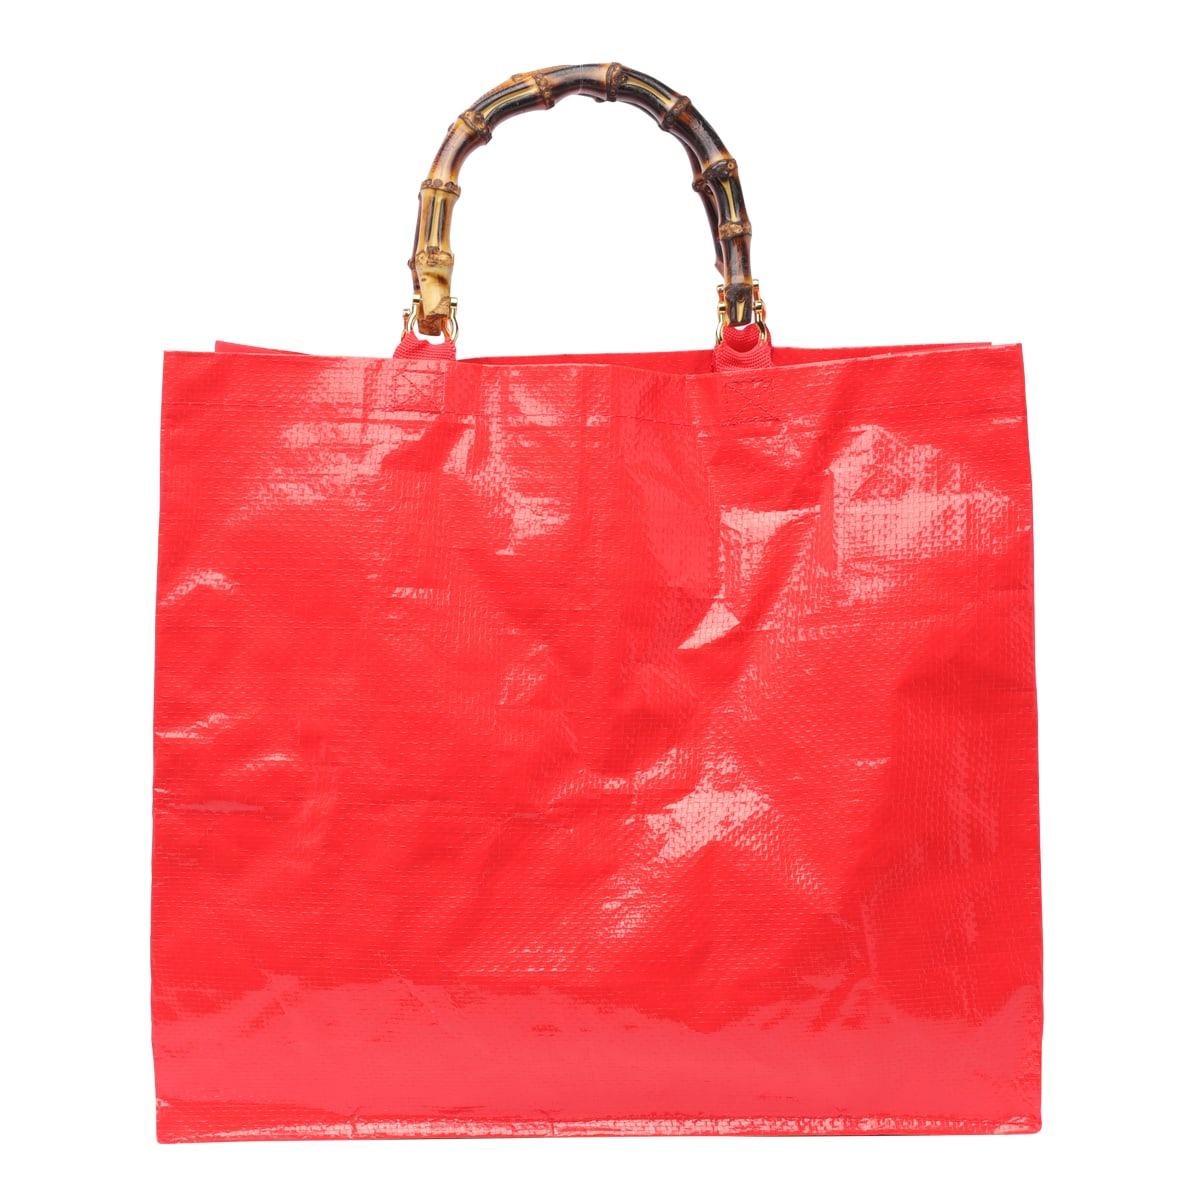 Shop Lamilanesa Sbagliato Shopping Bag In Red